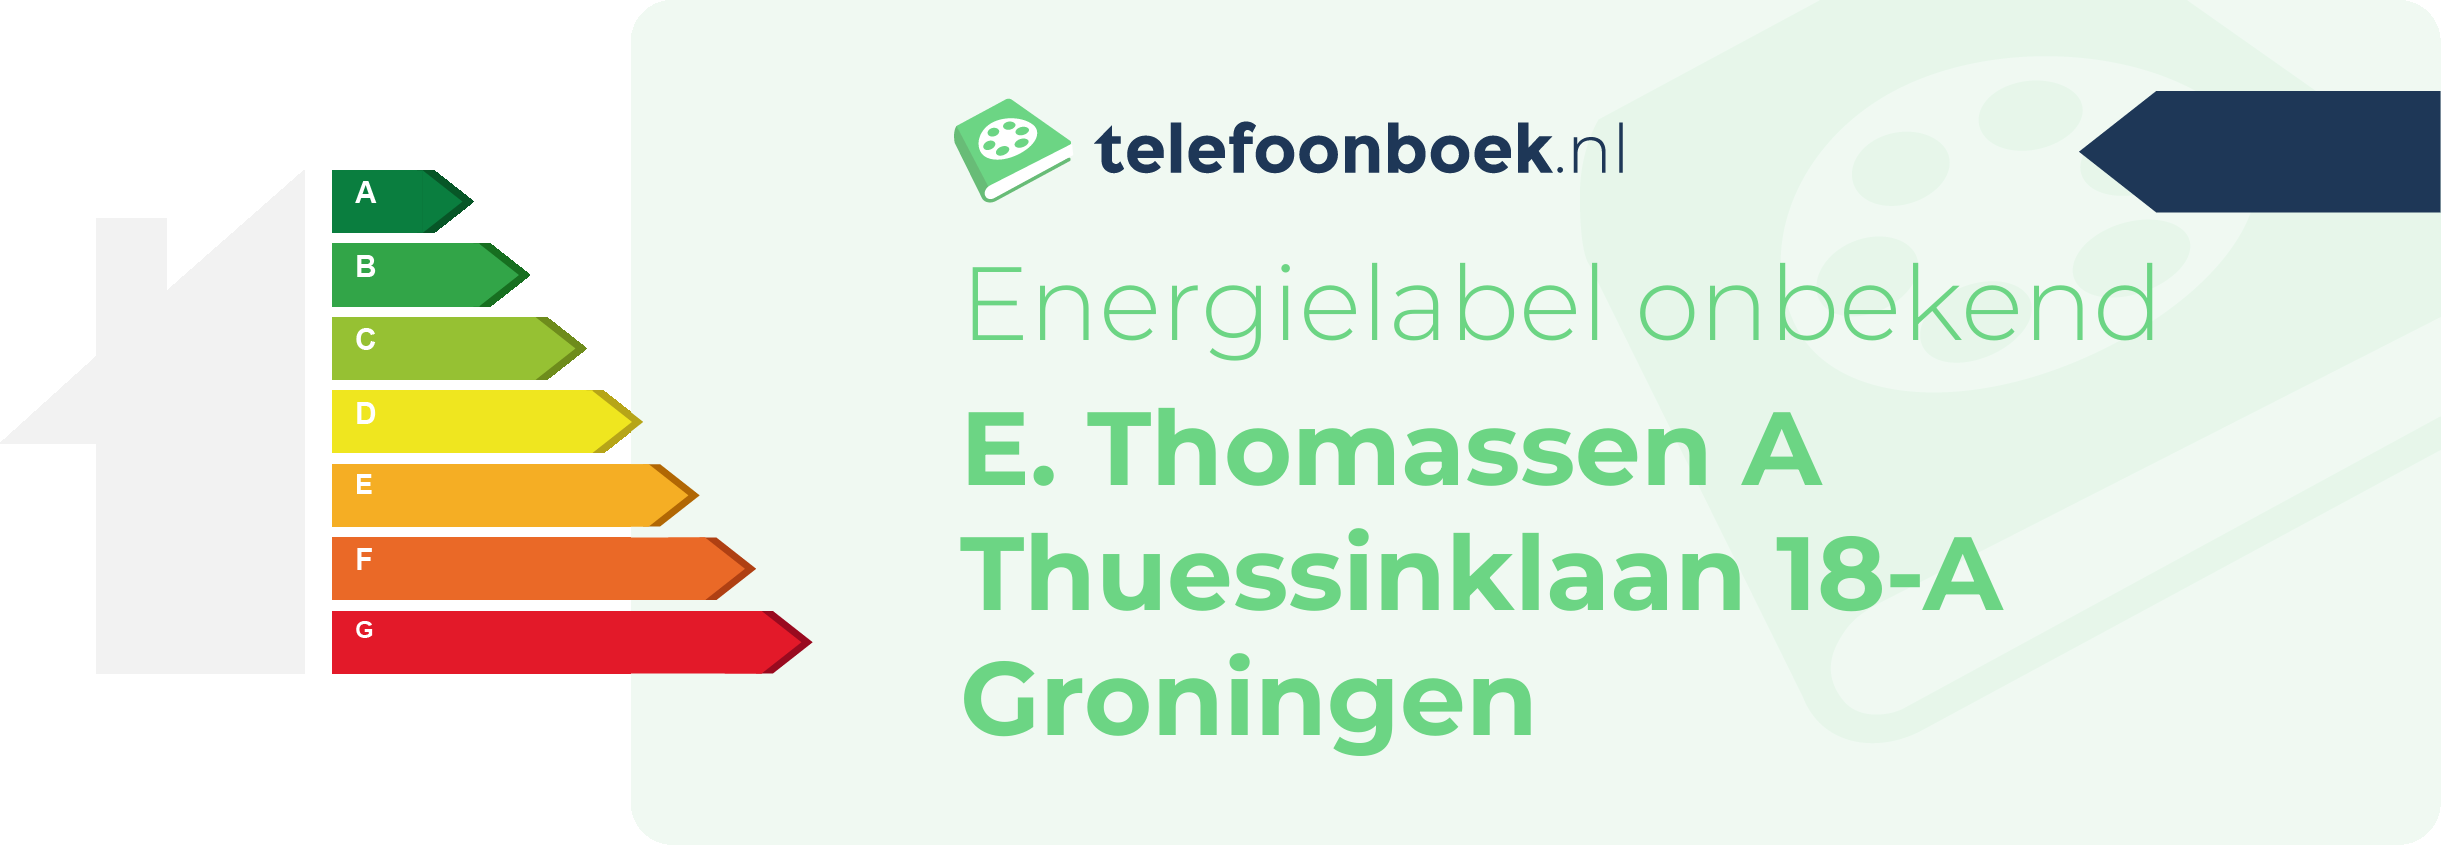 Energielabel E. Thomassen A Thuessinklaan 18-A Groningen